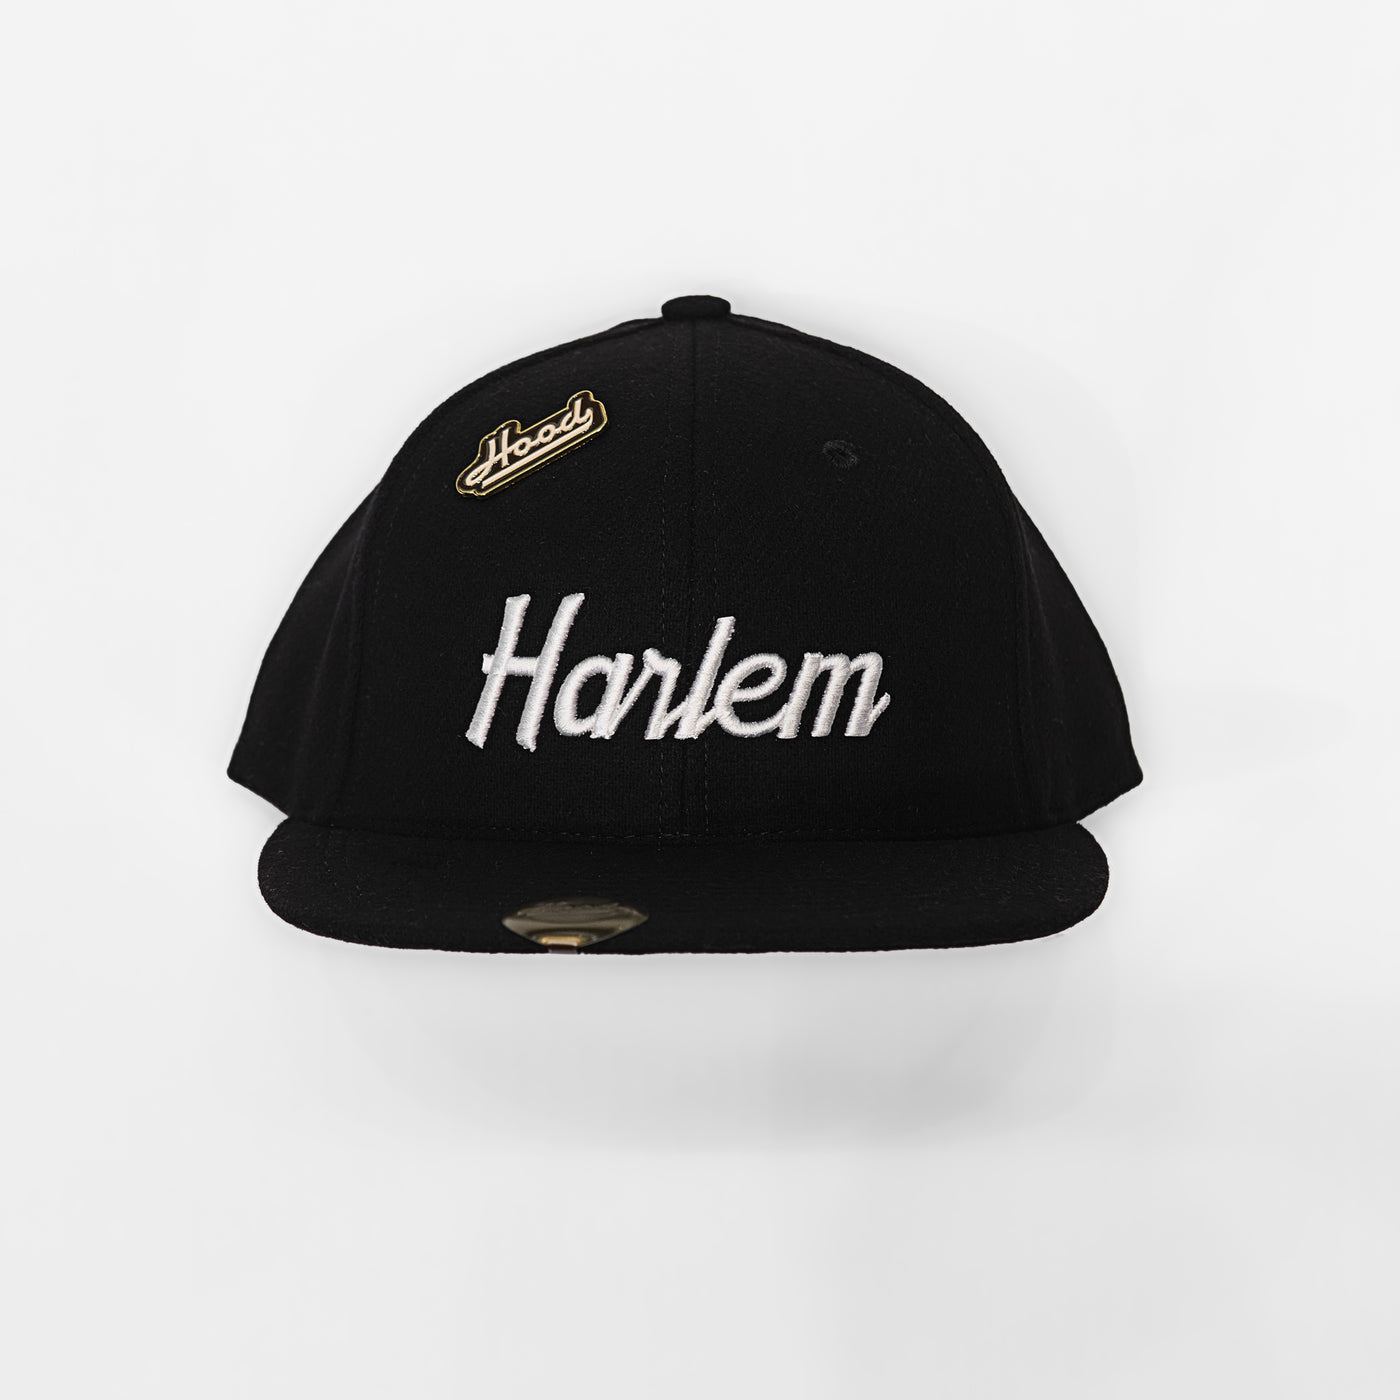 HOOD HATS "HARLEM"